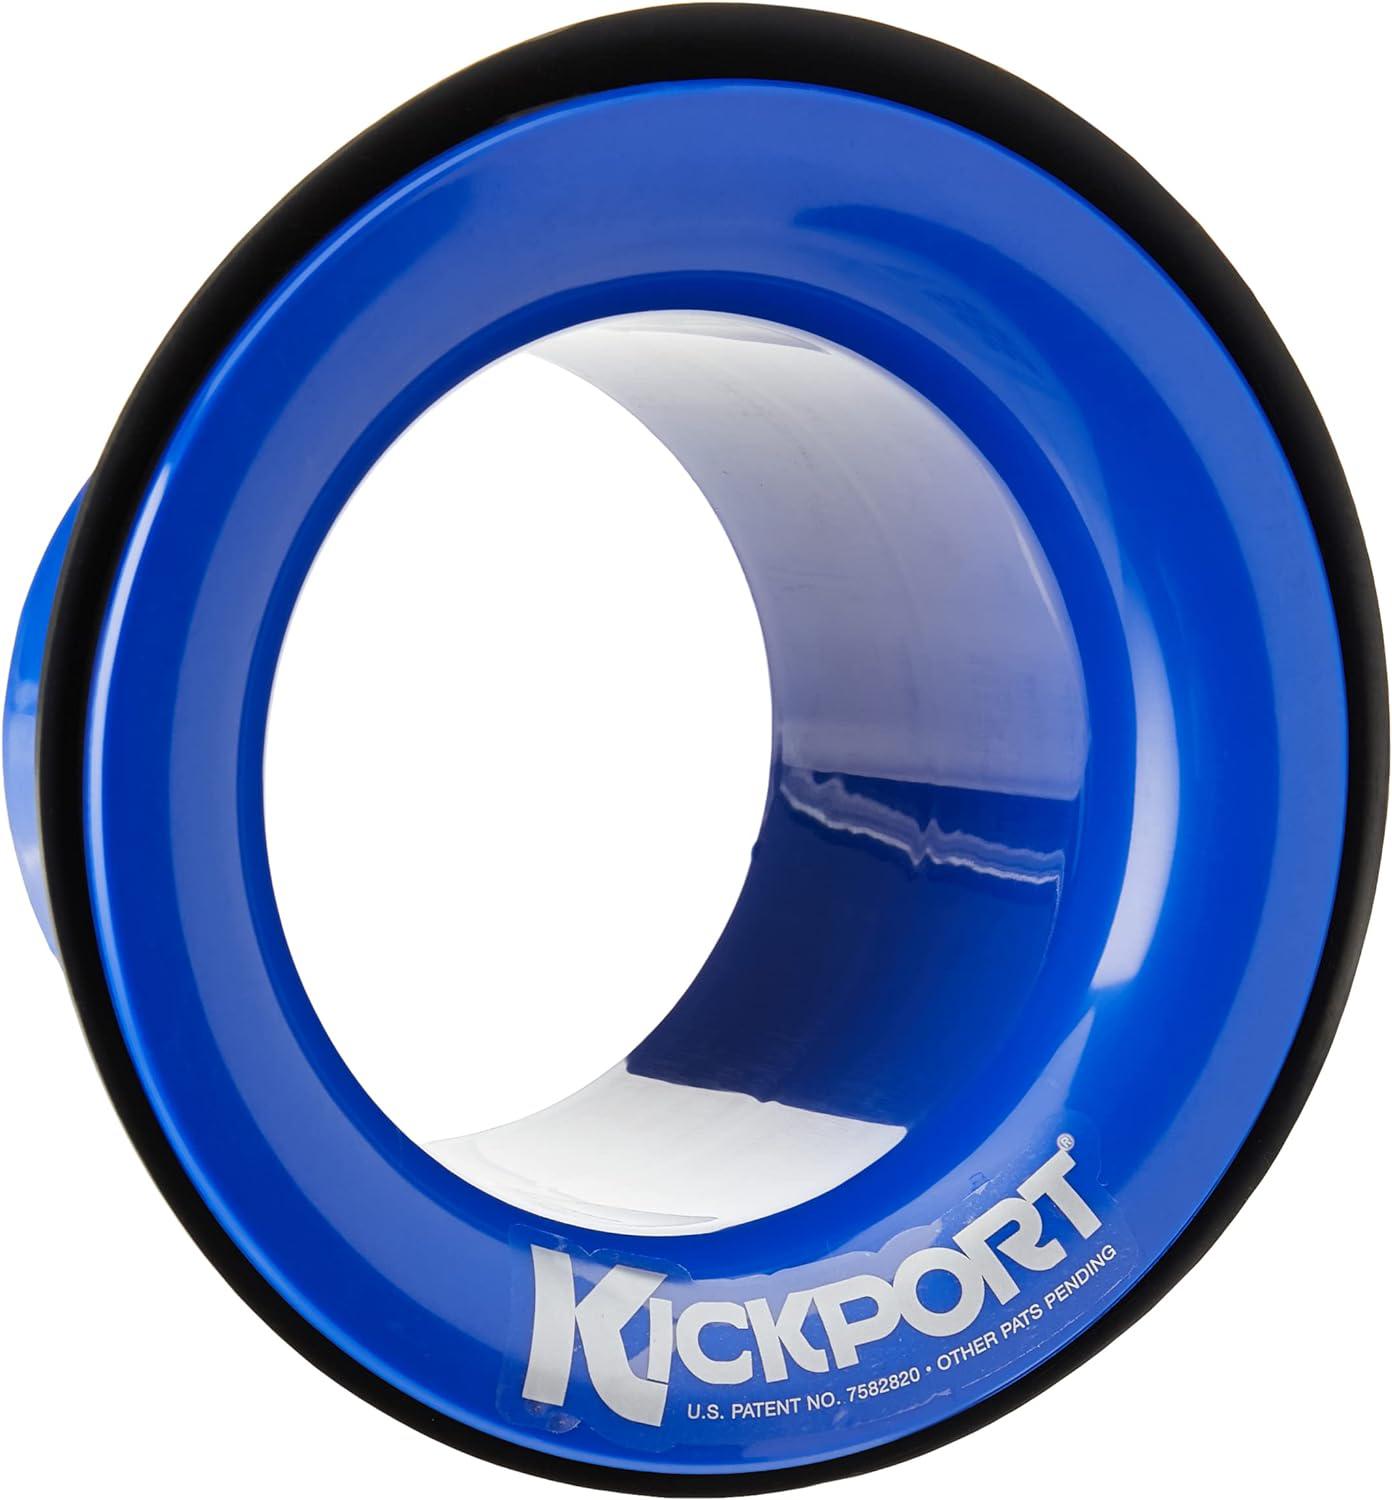 Kickport - Potenciador de Sonido para Parche de Bombo, Color: Azúl Mod.KP2-BLU_2